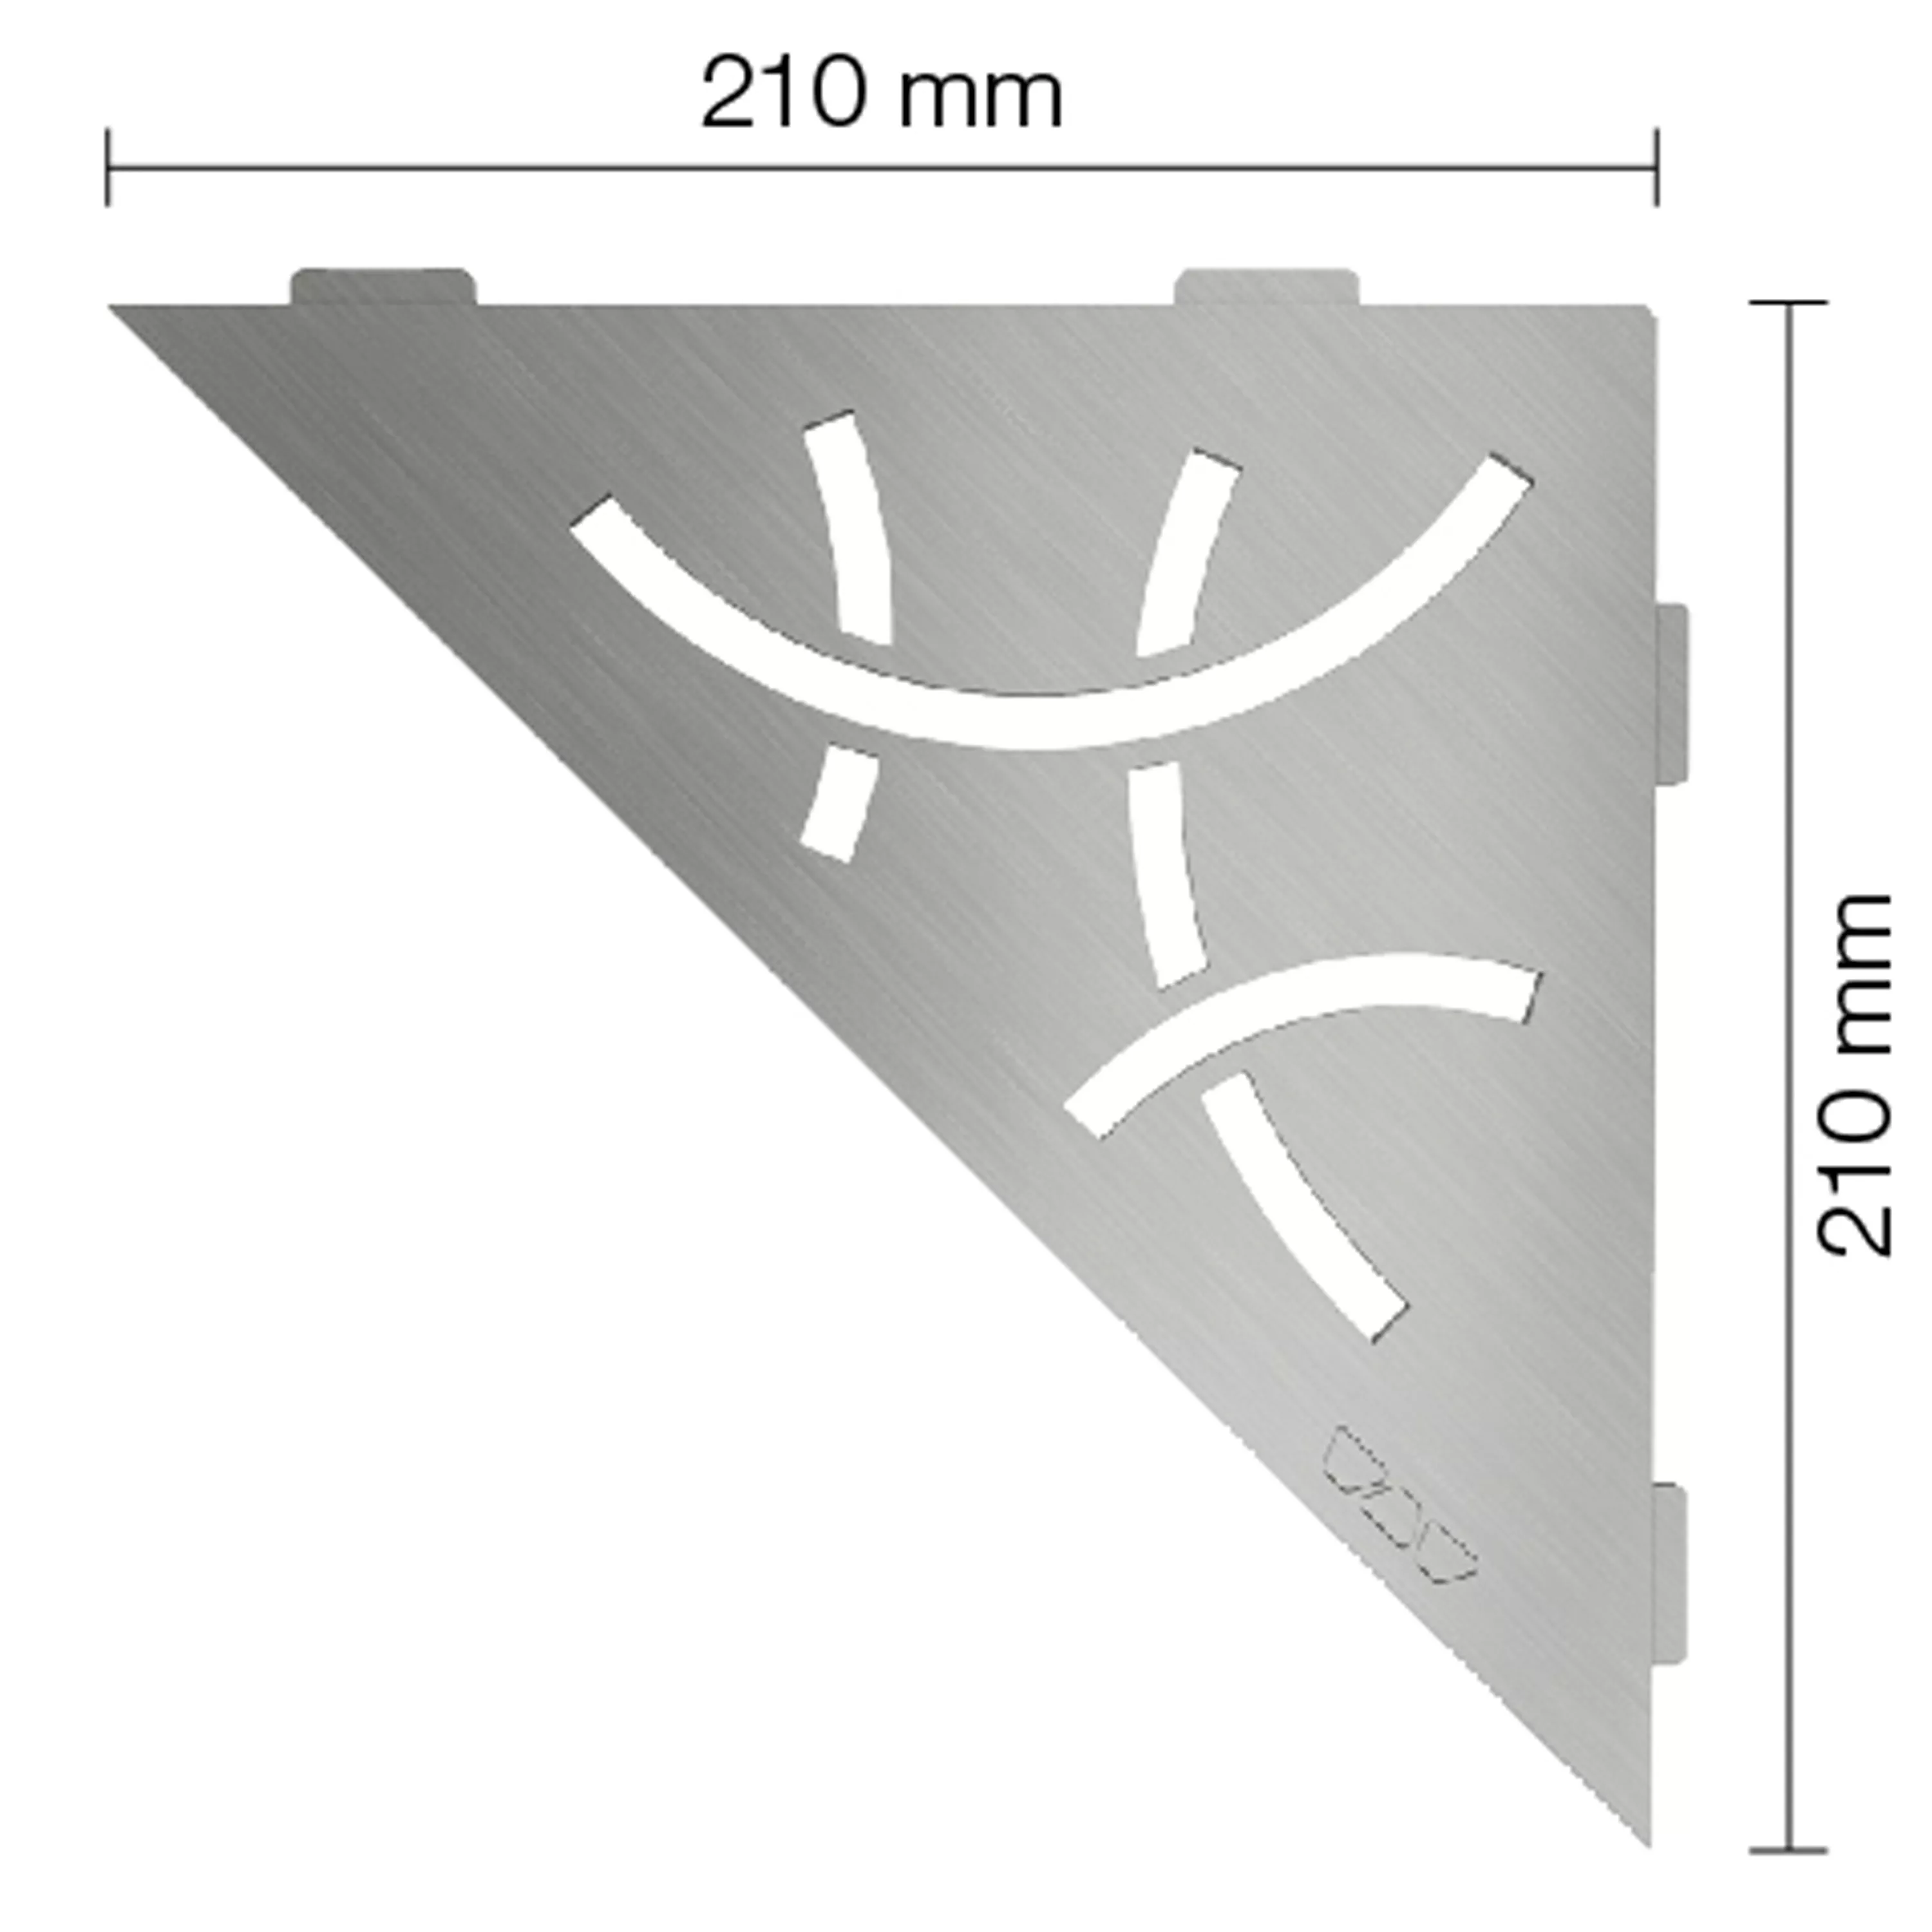 Schlüter wall shelf triangle 21x21cm Curve stainless steel